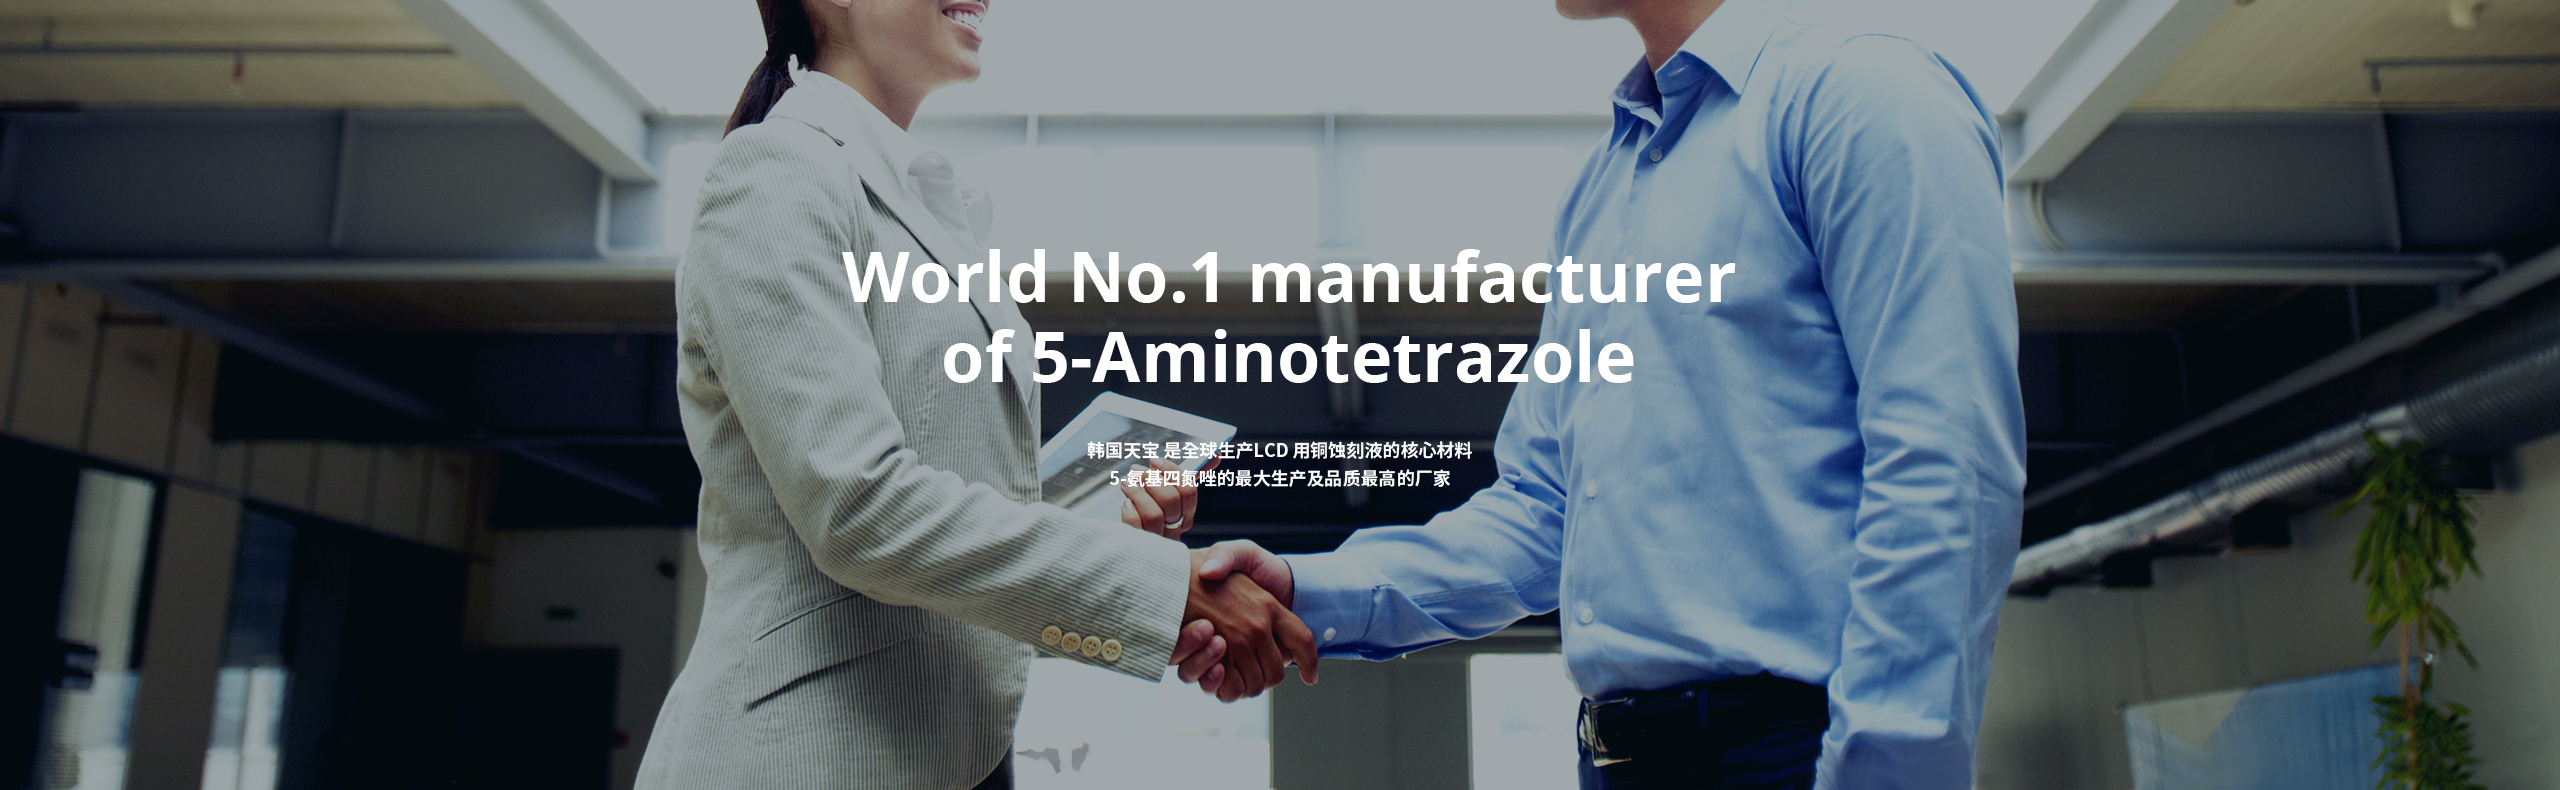 World No.1 manufacturer of 5-Aminotetrazole